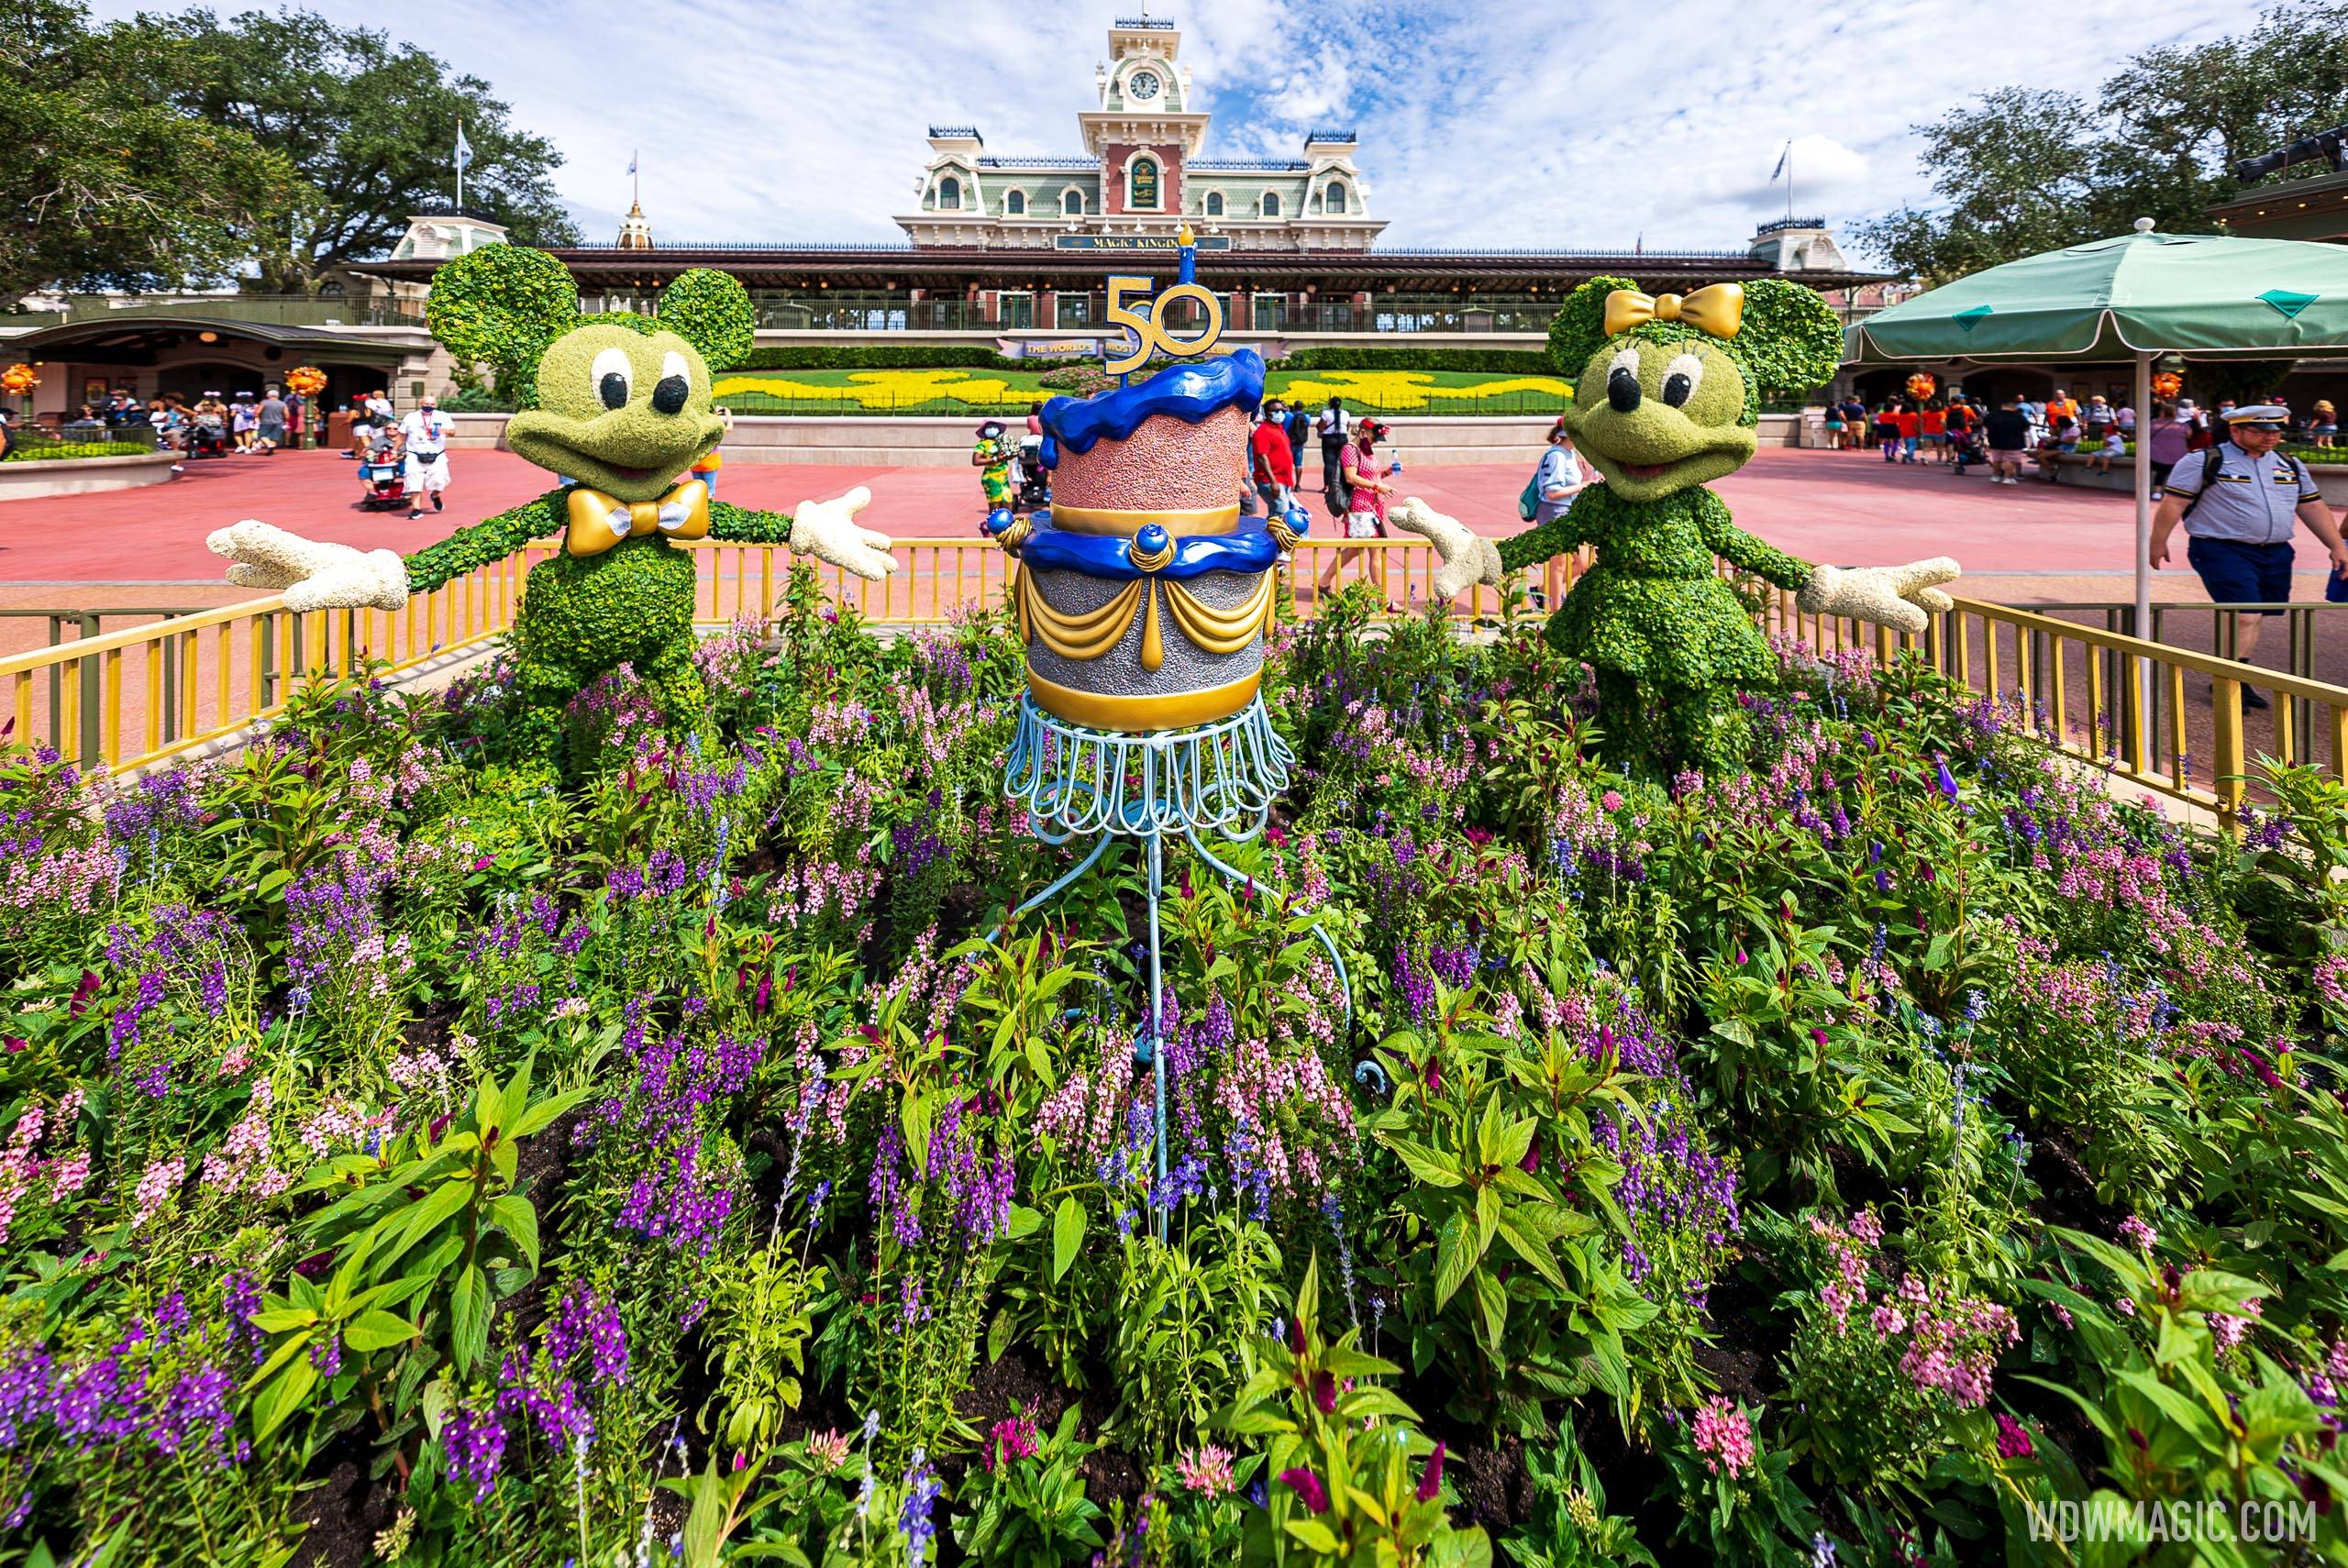 50th birthday cake joins Mickey and Minnie topiary at the Magic Kingdom main entrance